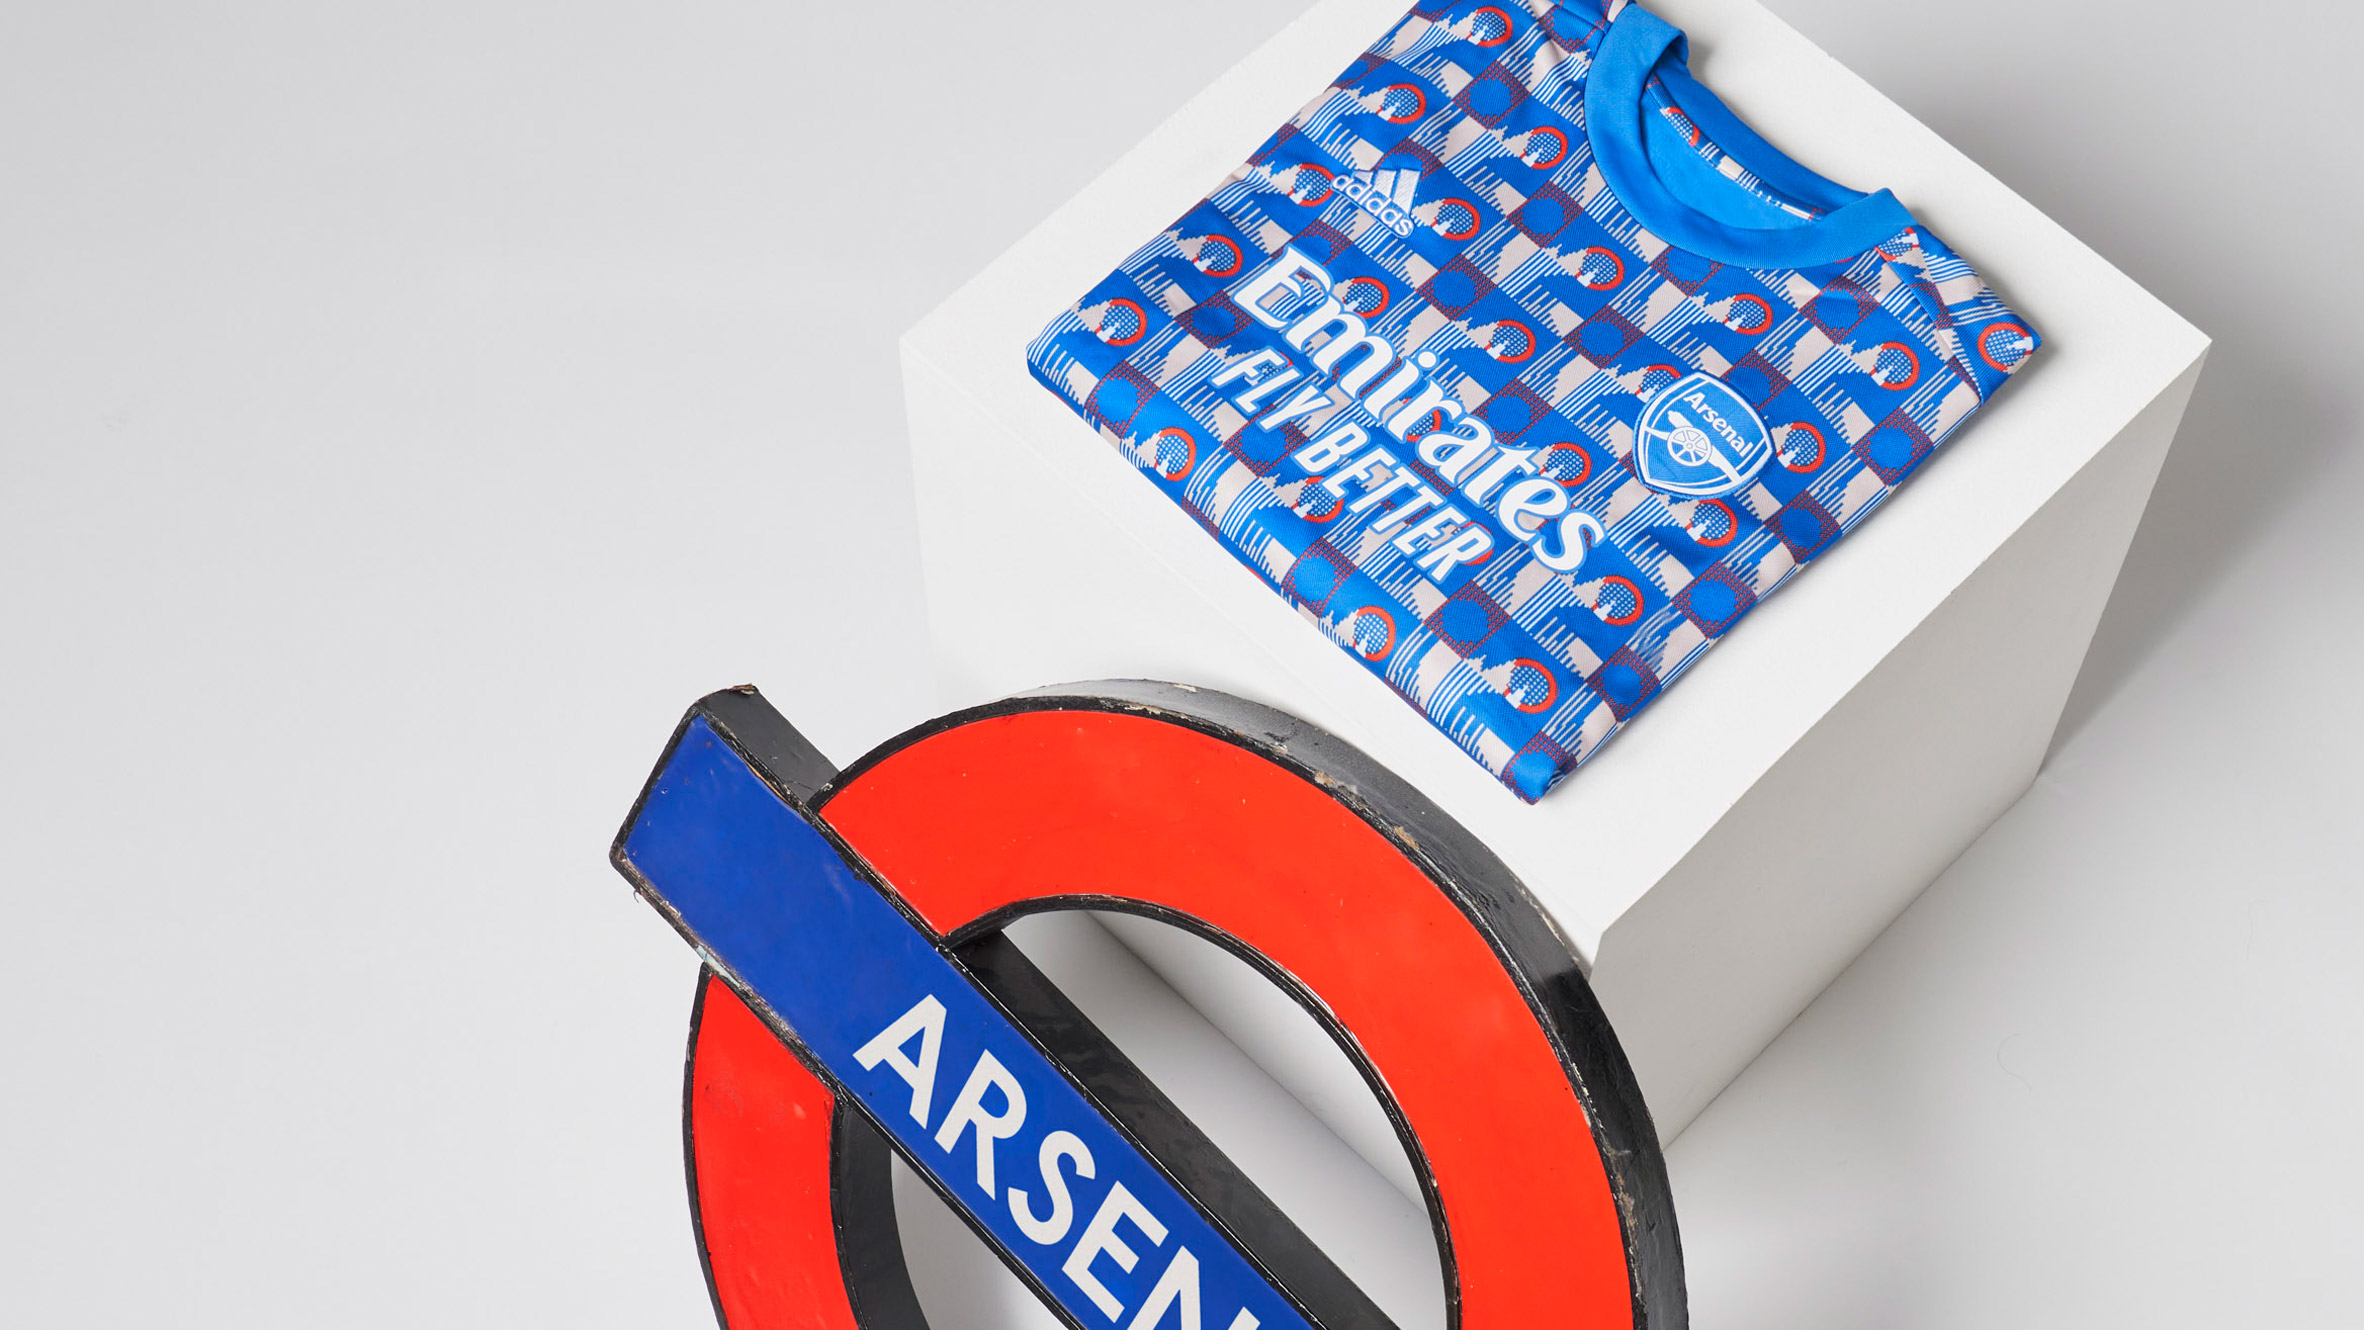 Adidas' latest football kit for Arsenal